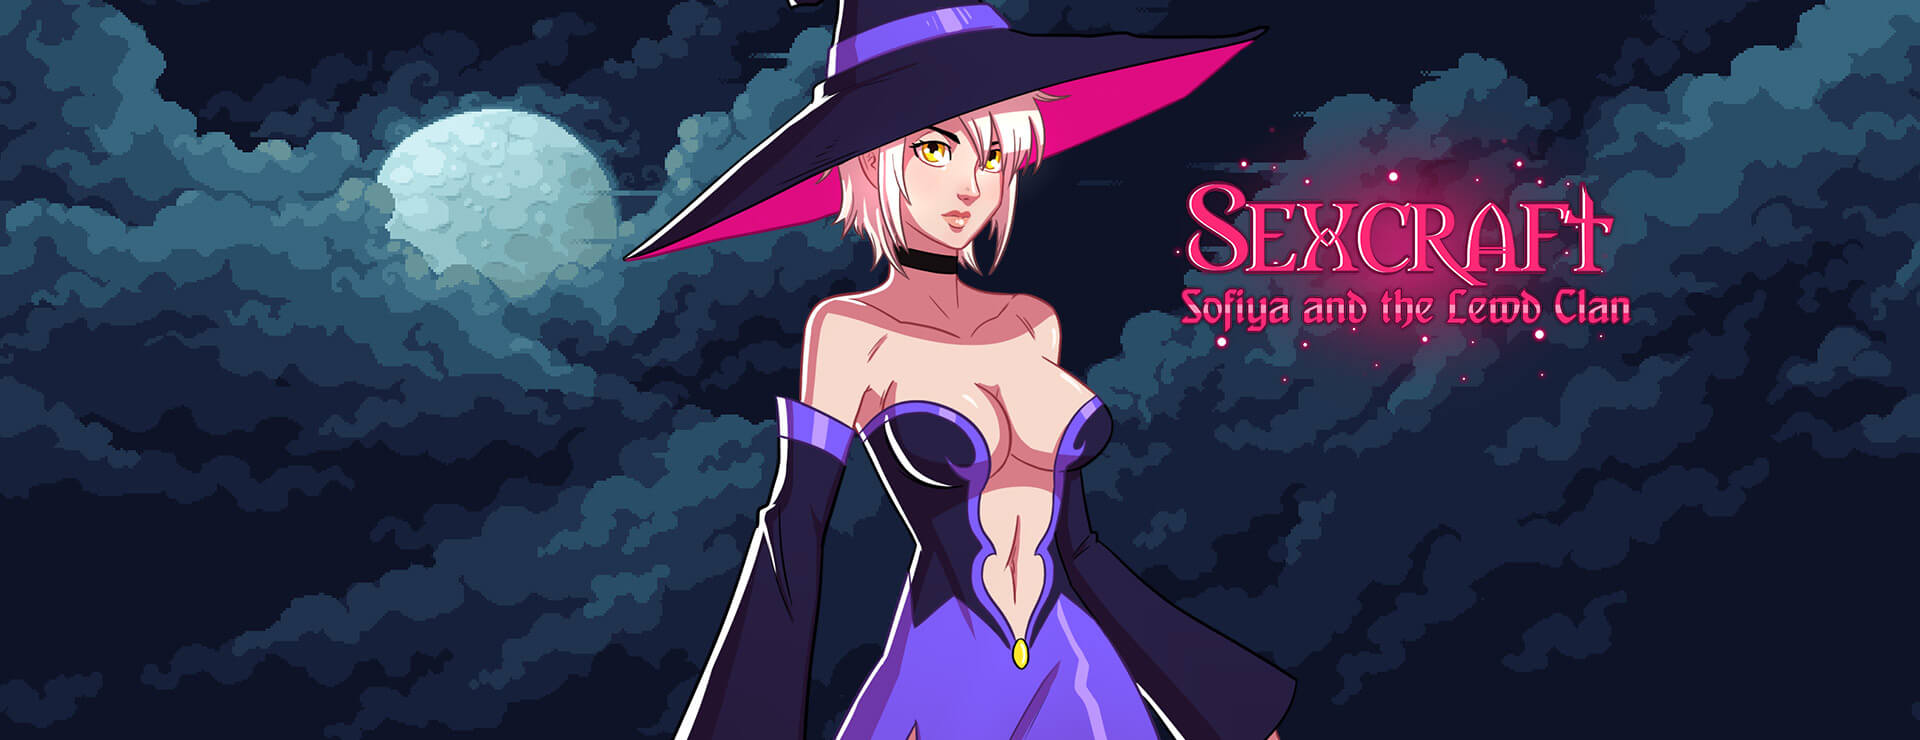 Sexcraft - Sofiya and the Lewd Clan - Action Aventure Jeu